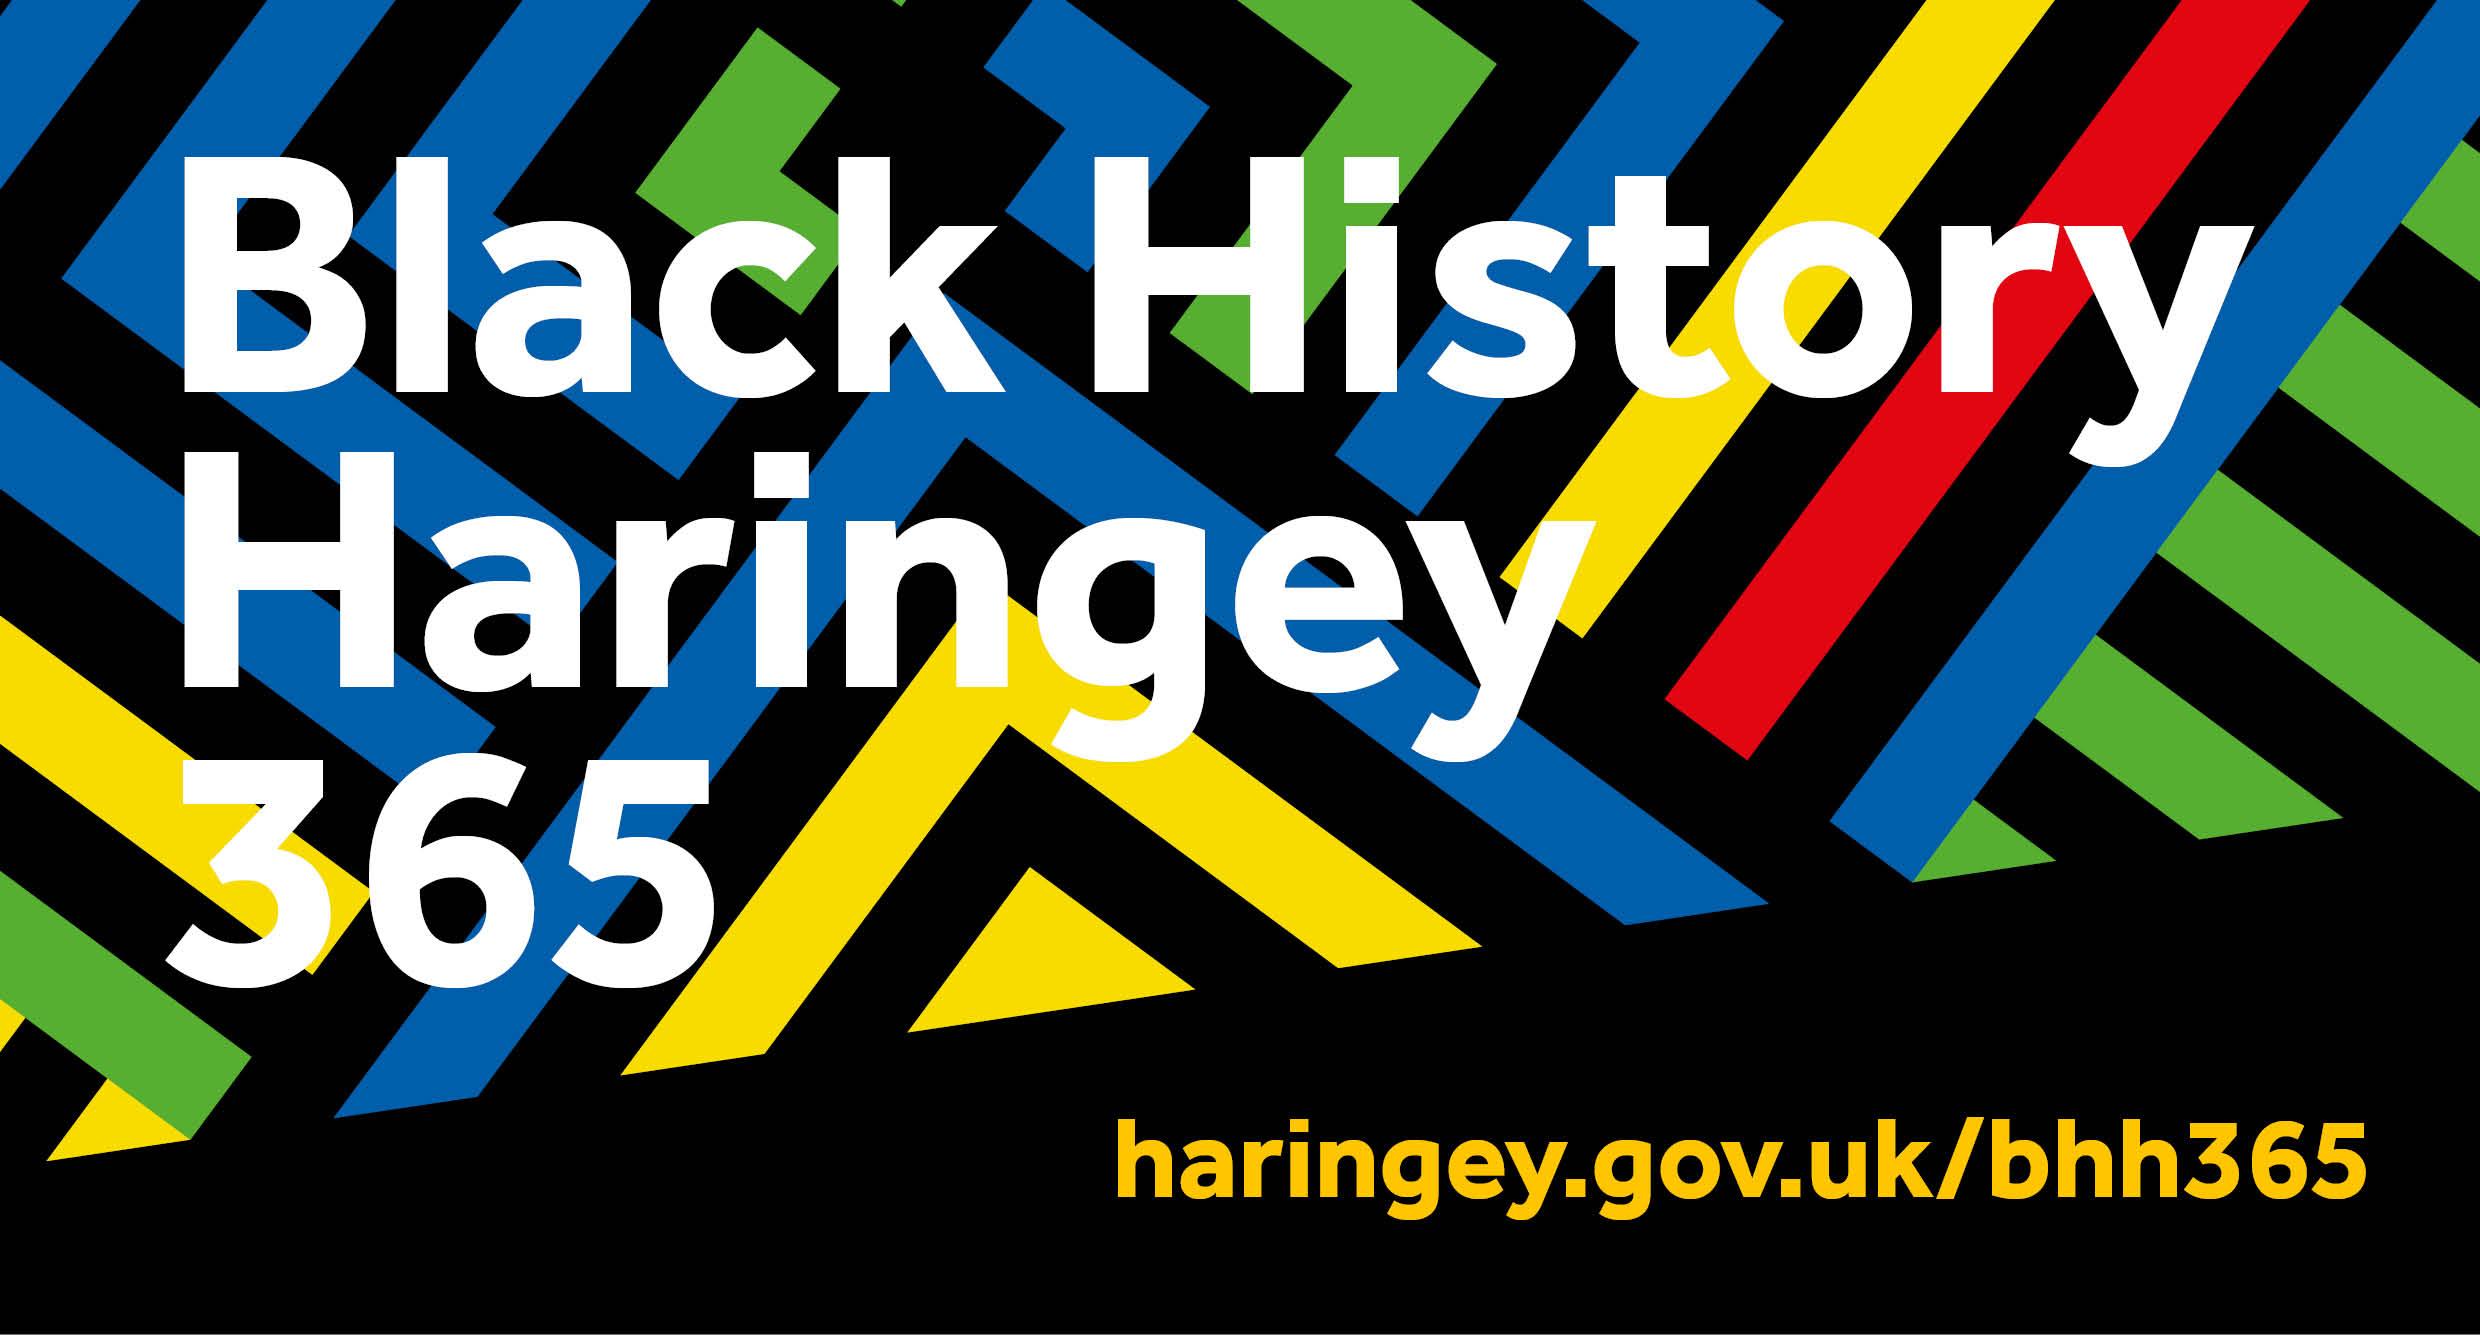 Black History Haringey 365